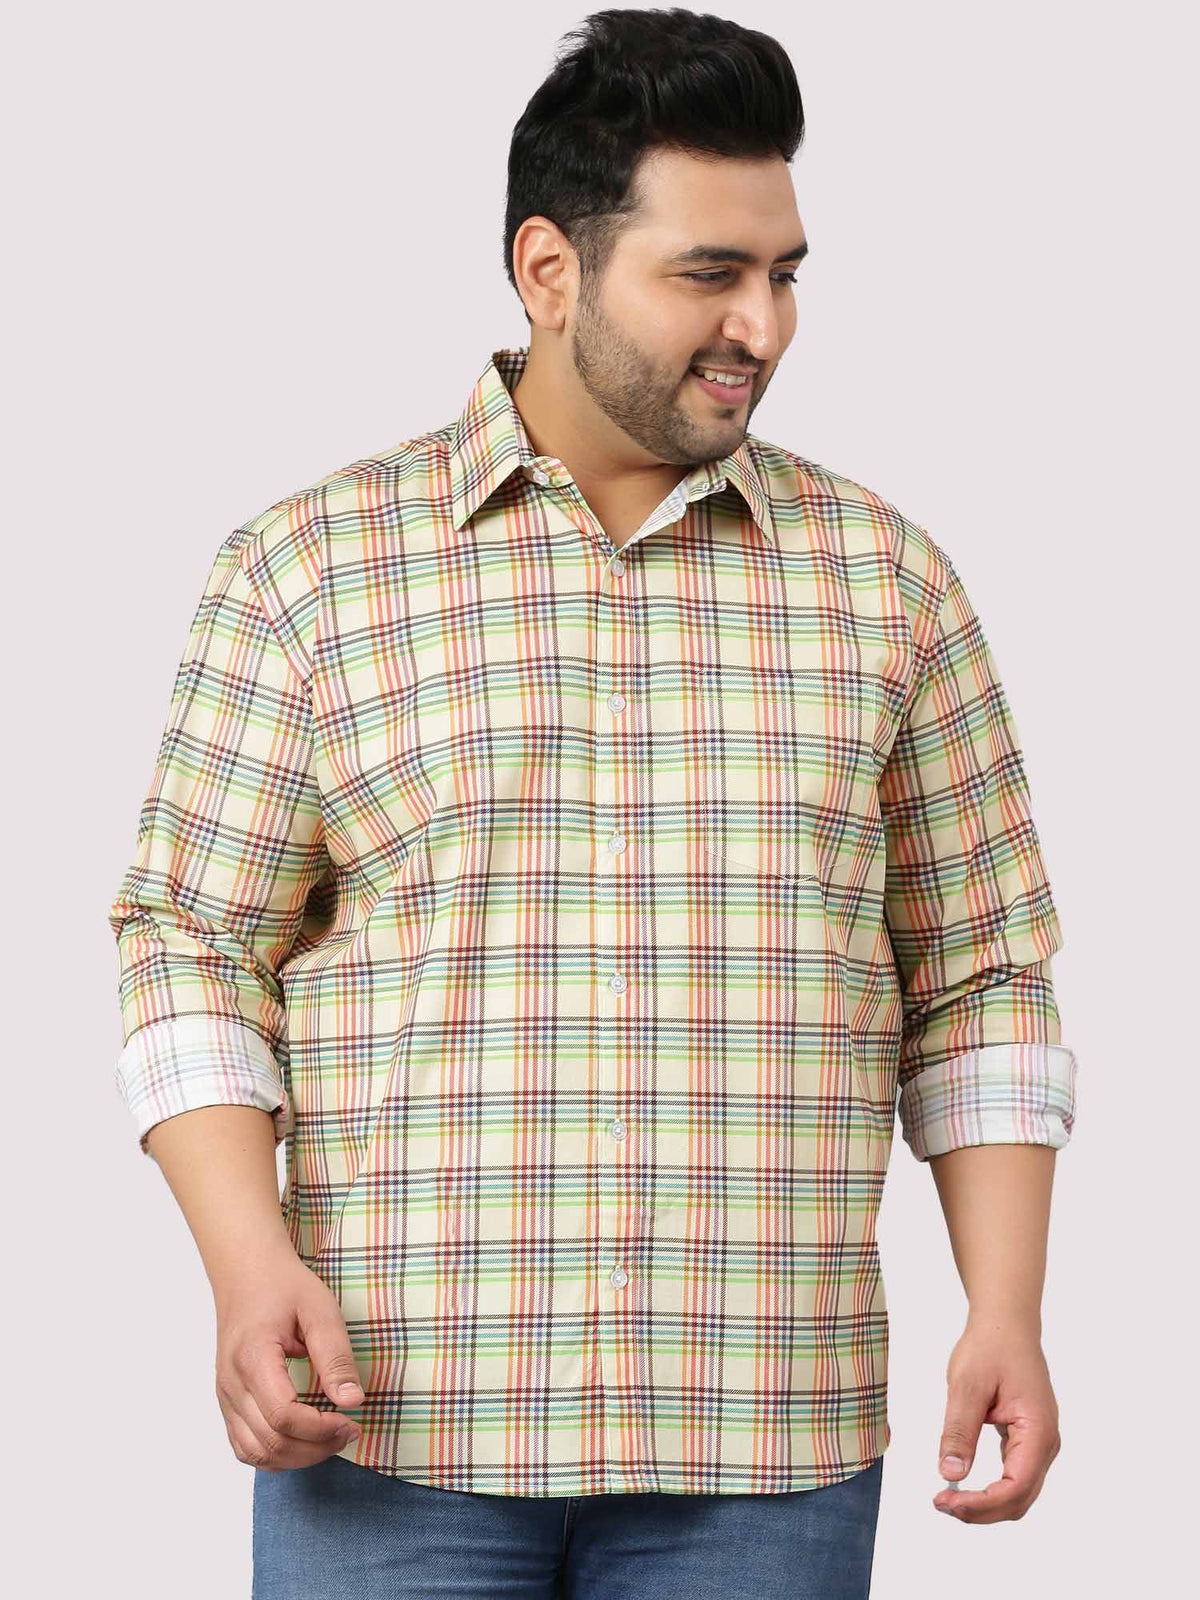 Light and Bright Yellow Checks Shirts Men's Plus Size - Guniaa Fashions